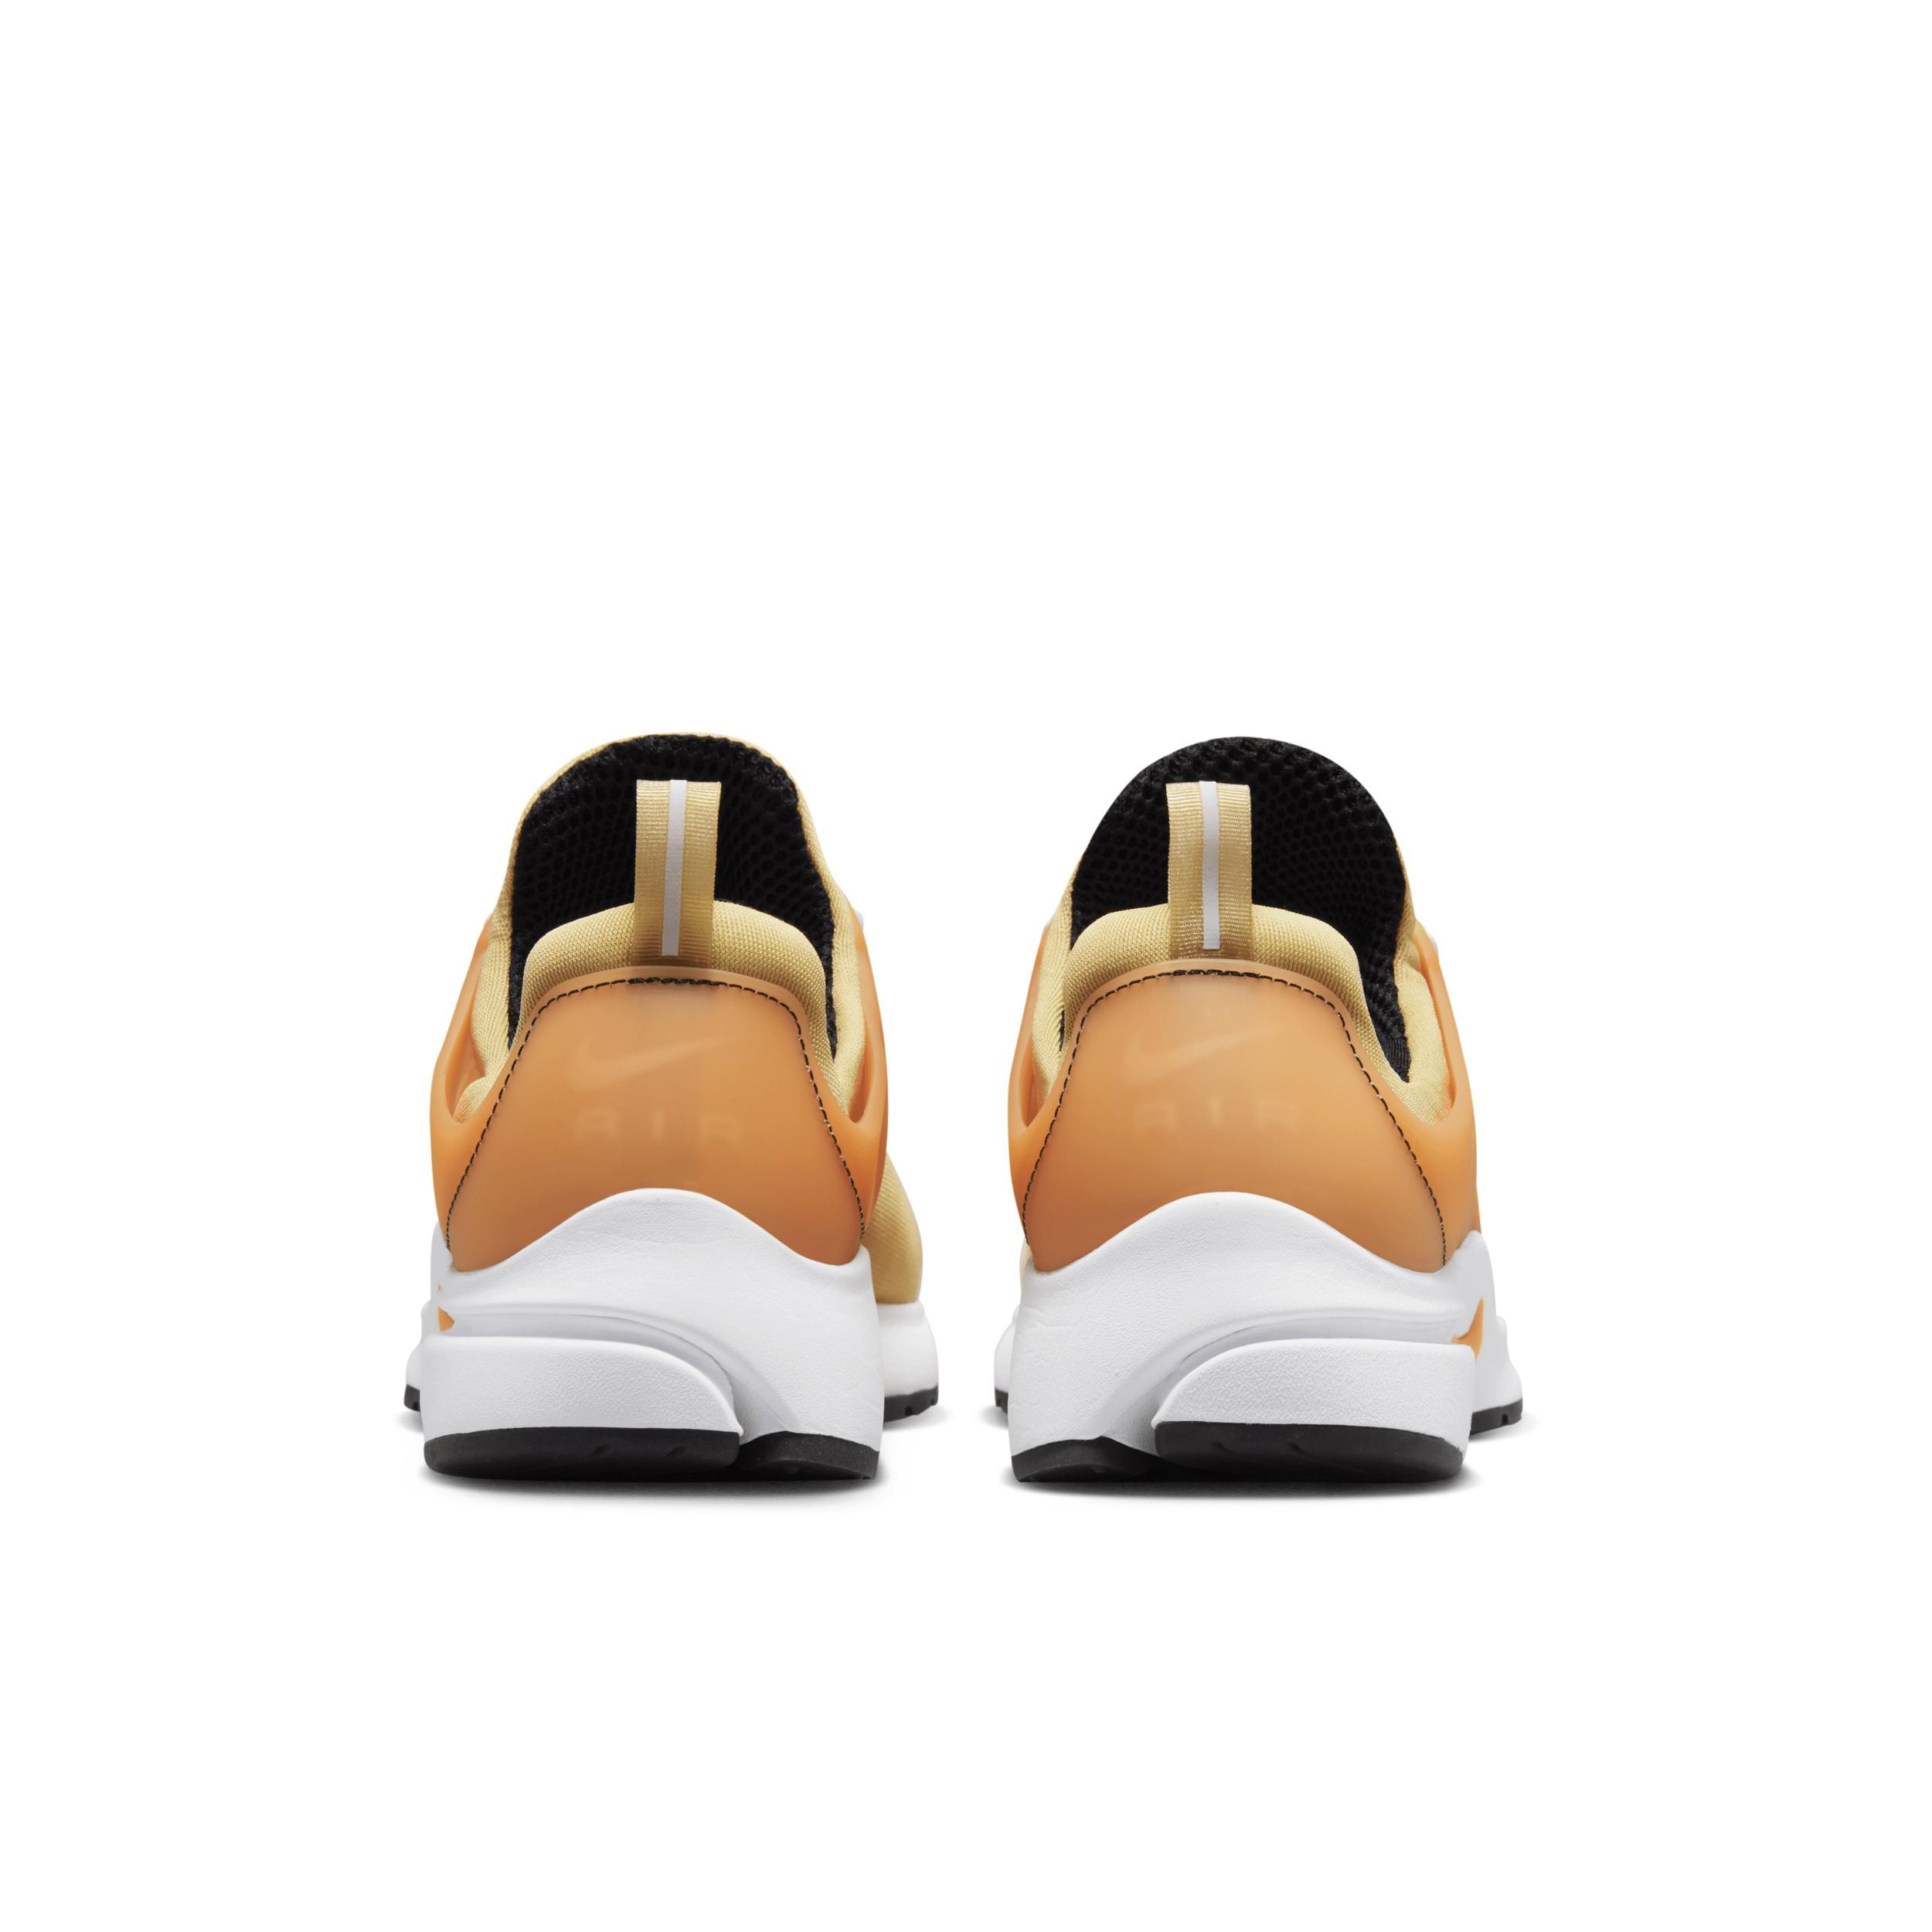 Nike Air Presto Sneaker Product Image